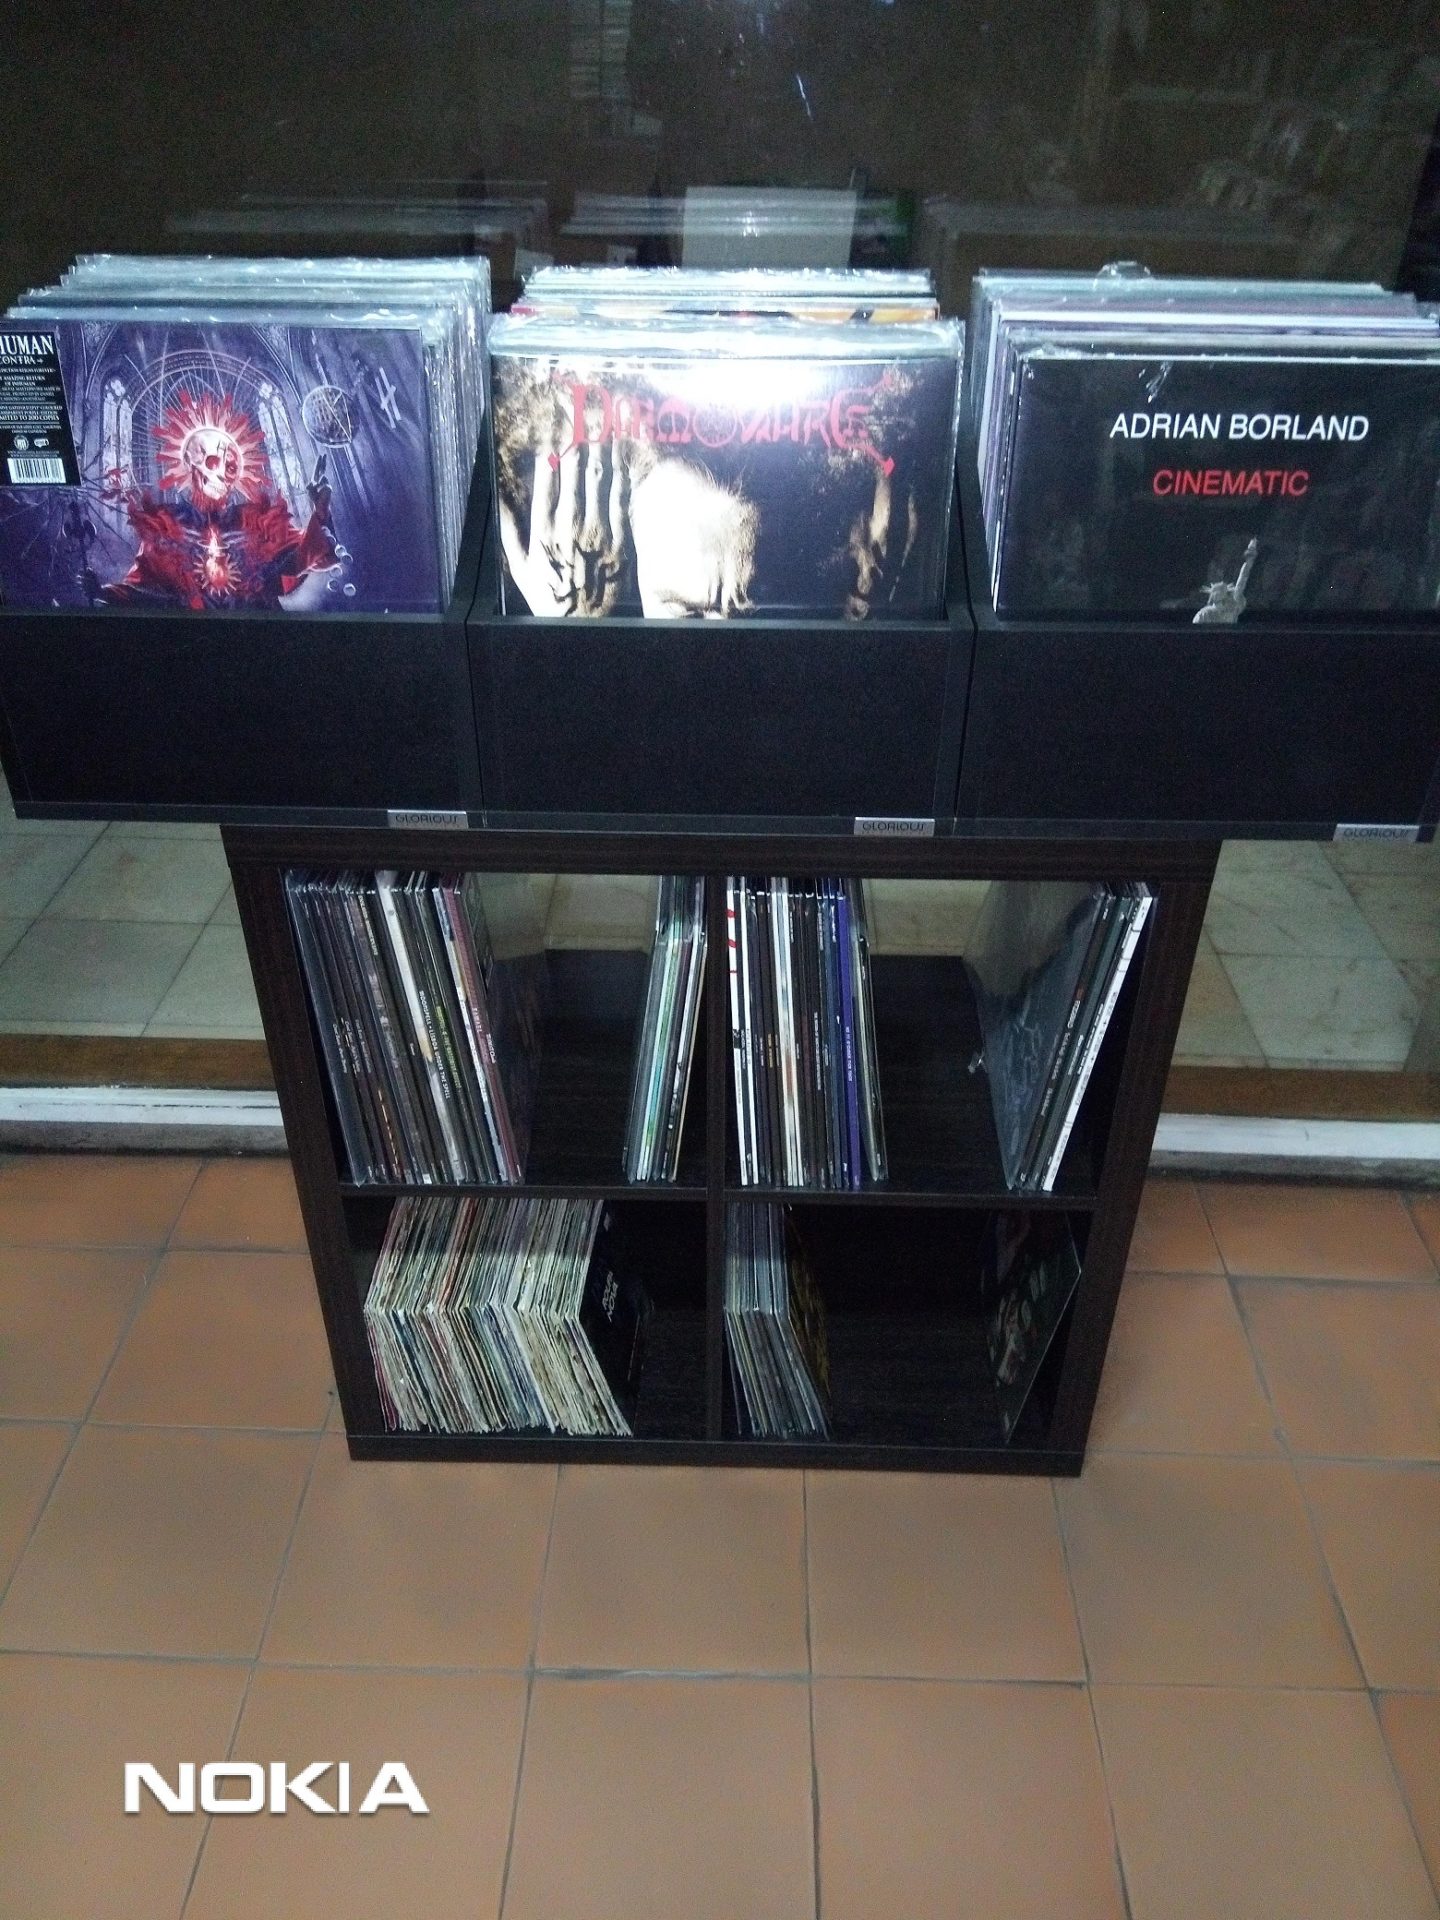 Piranha Record Store - 4 of 5